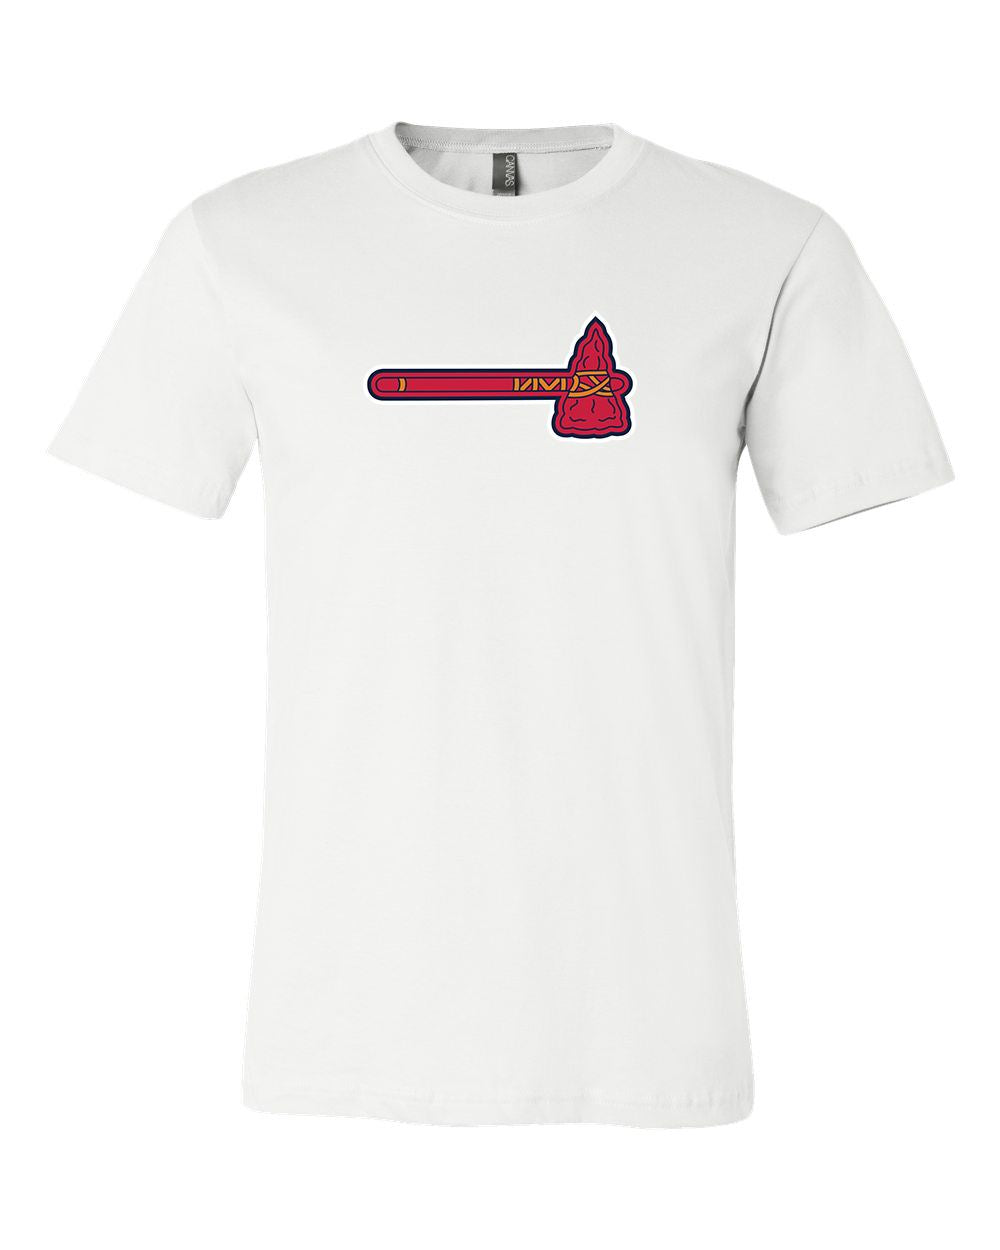 Atlanta Braves World Series Champions Tomahawk Chop Shirt - High-Quality  Printed Brand